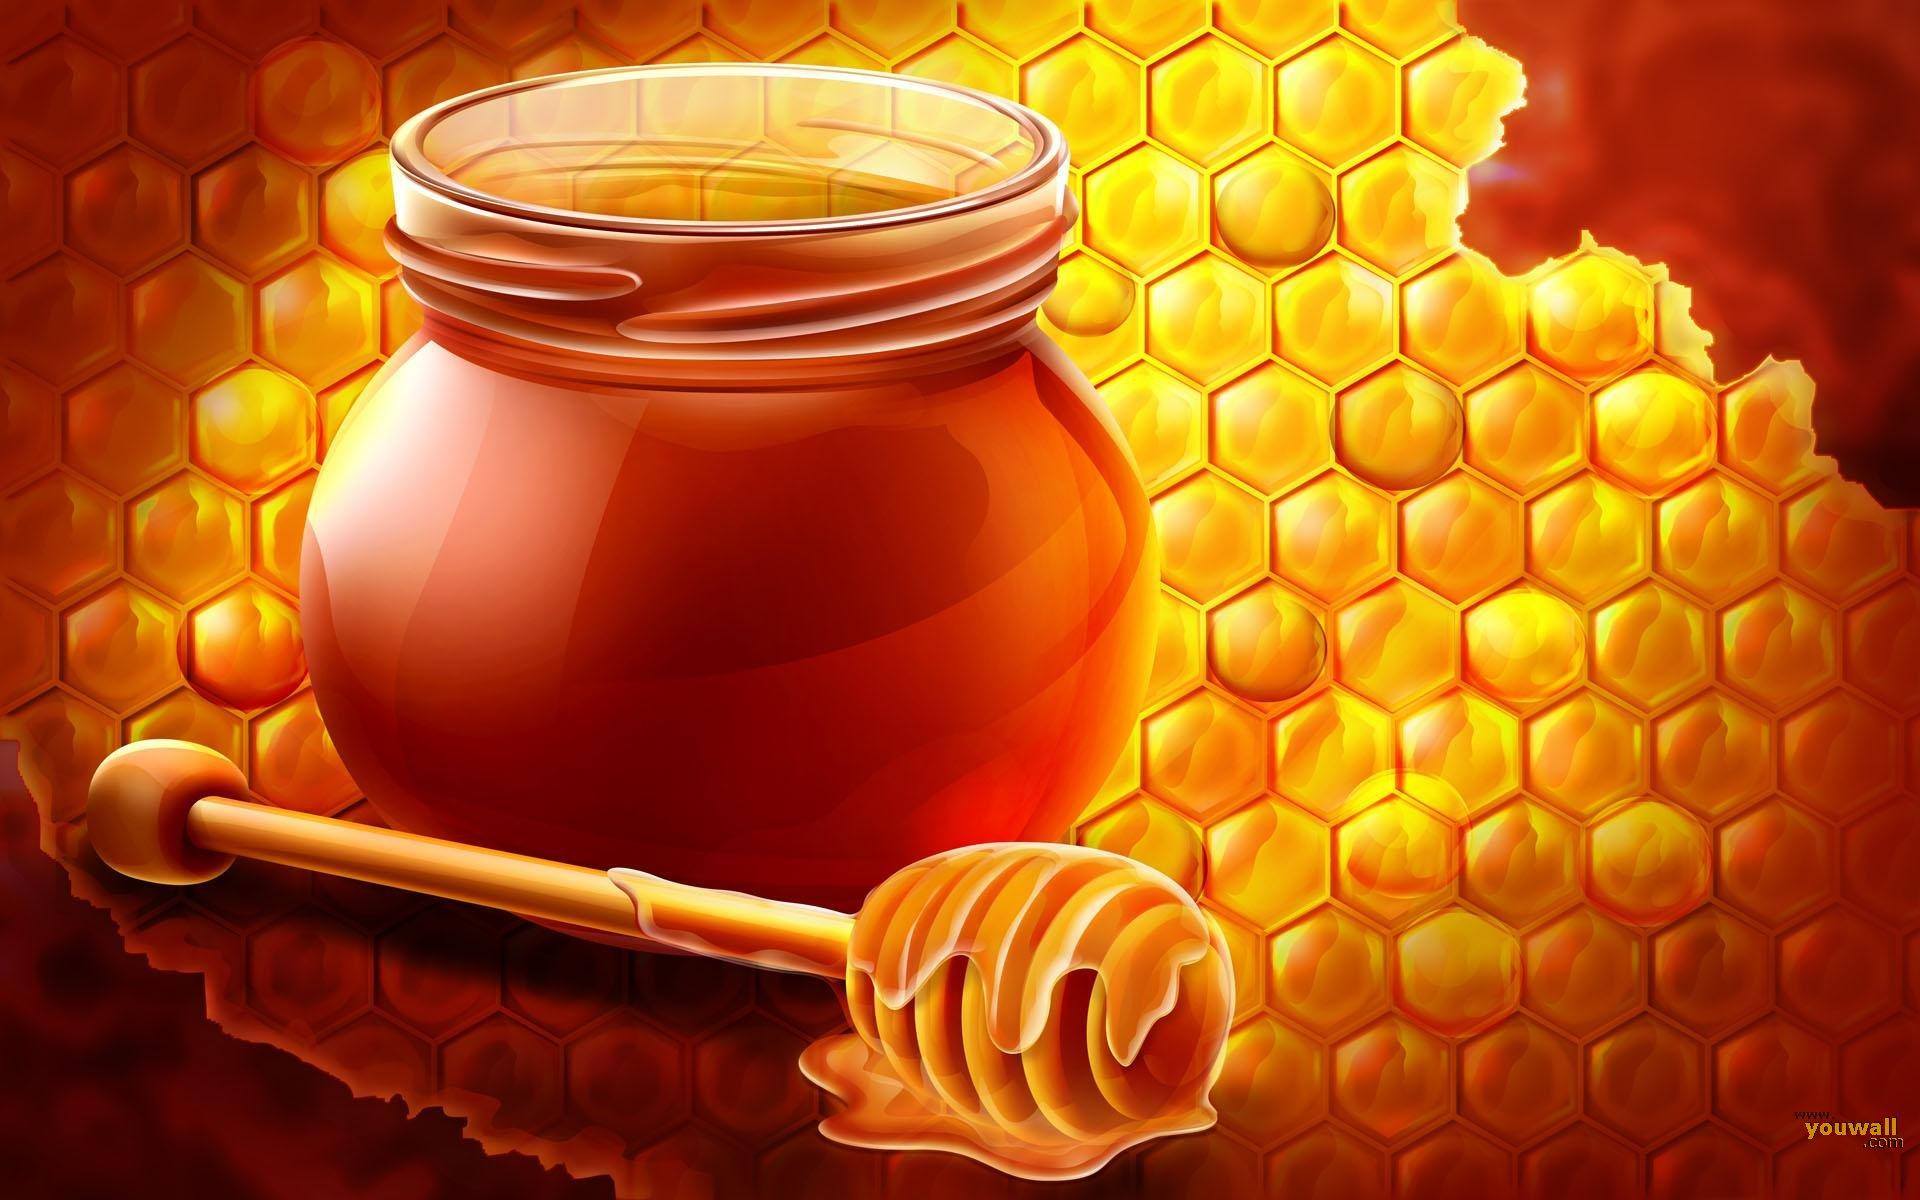 Honey & Its benefits